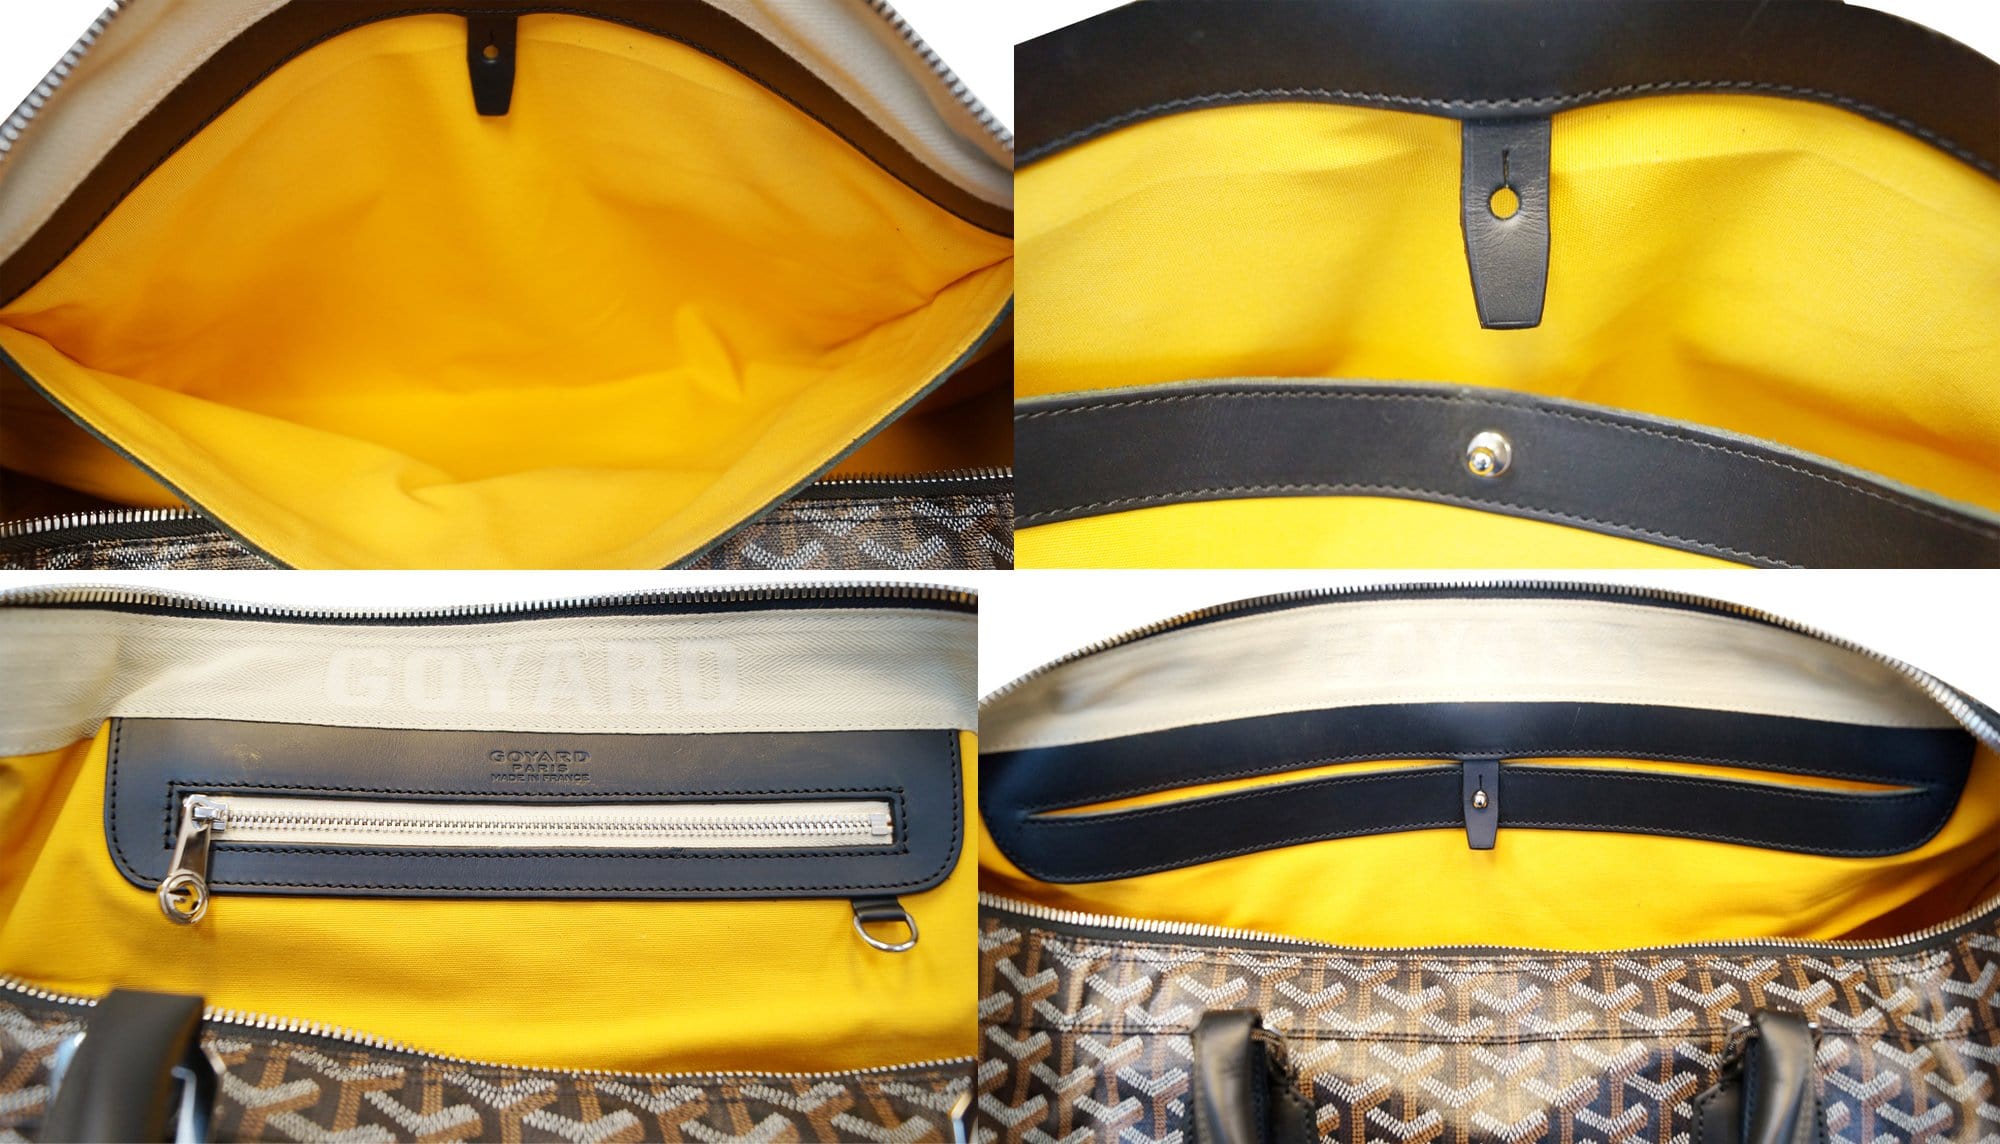 Goyard Travel bag for women  Buy or Sell your Designer bags